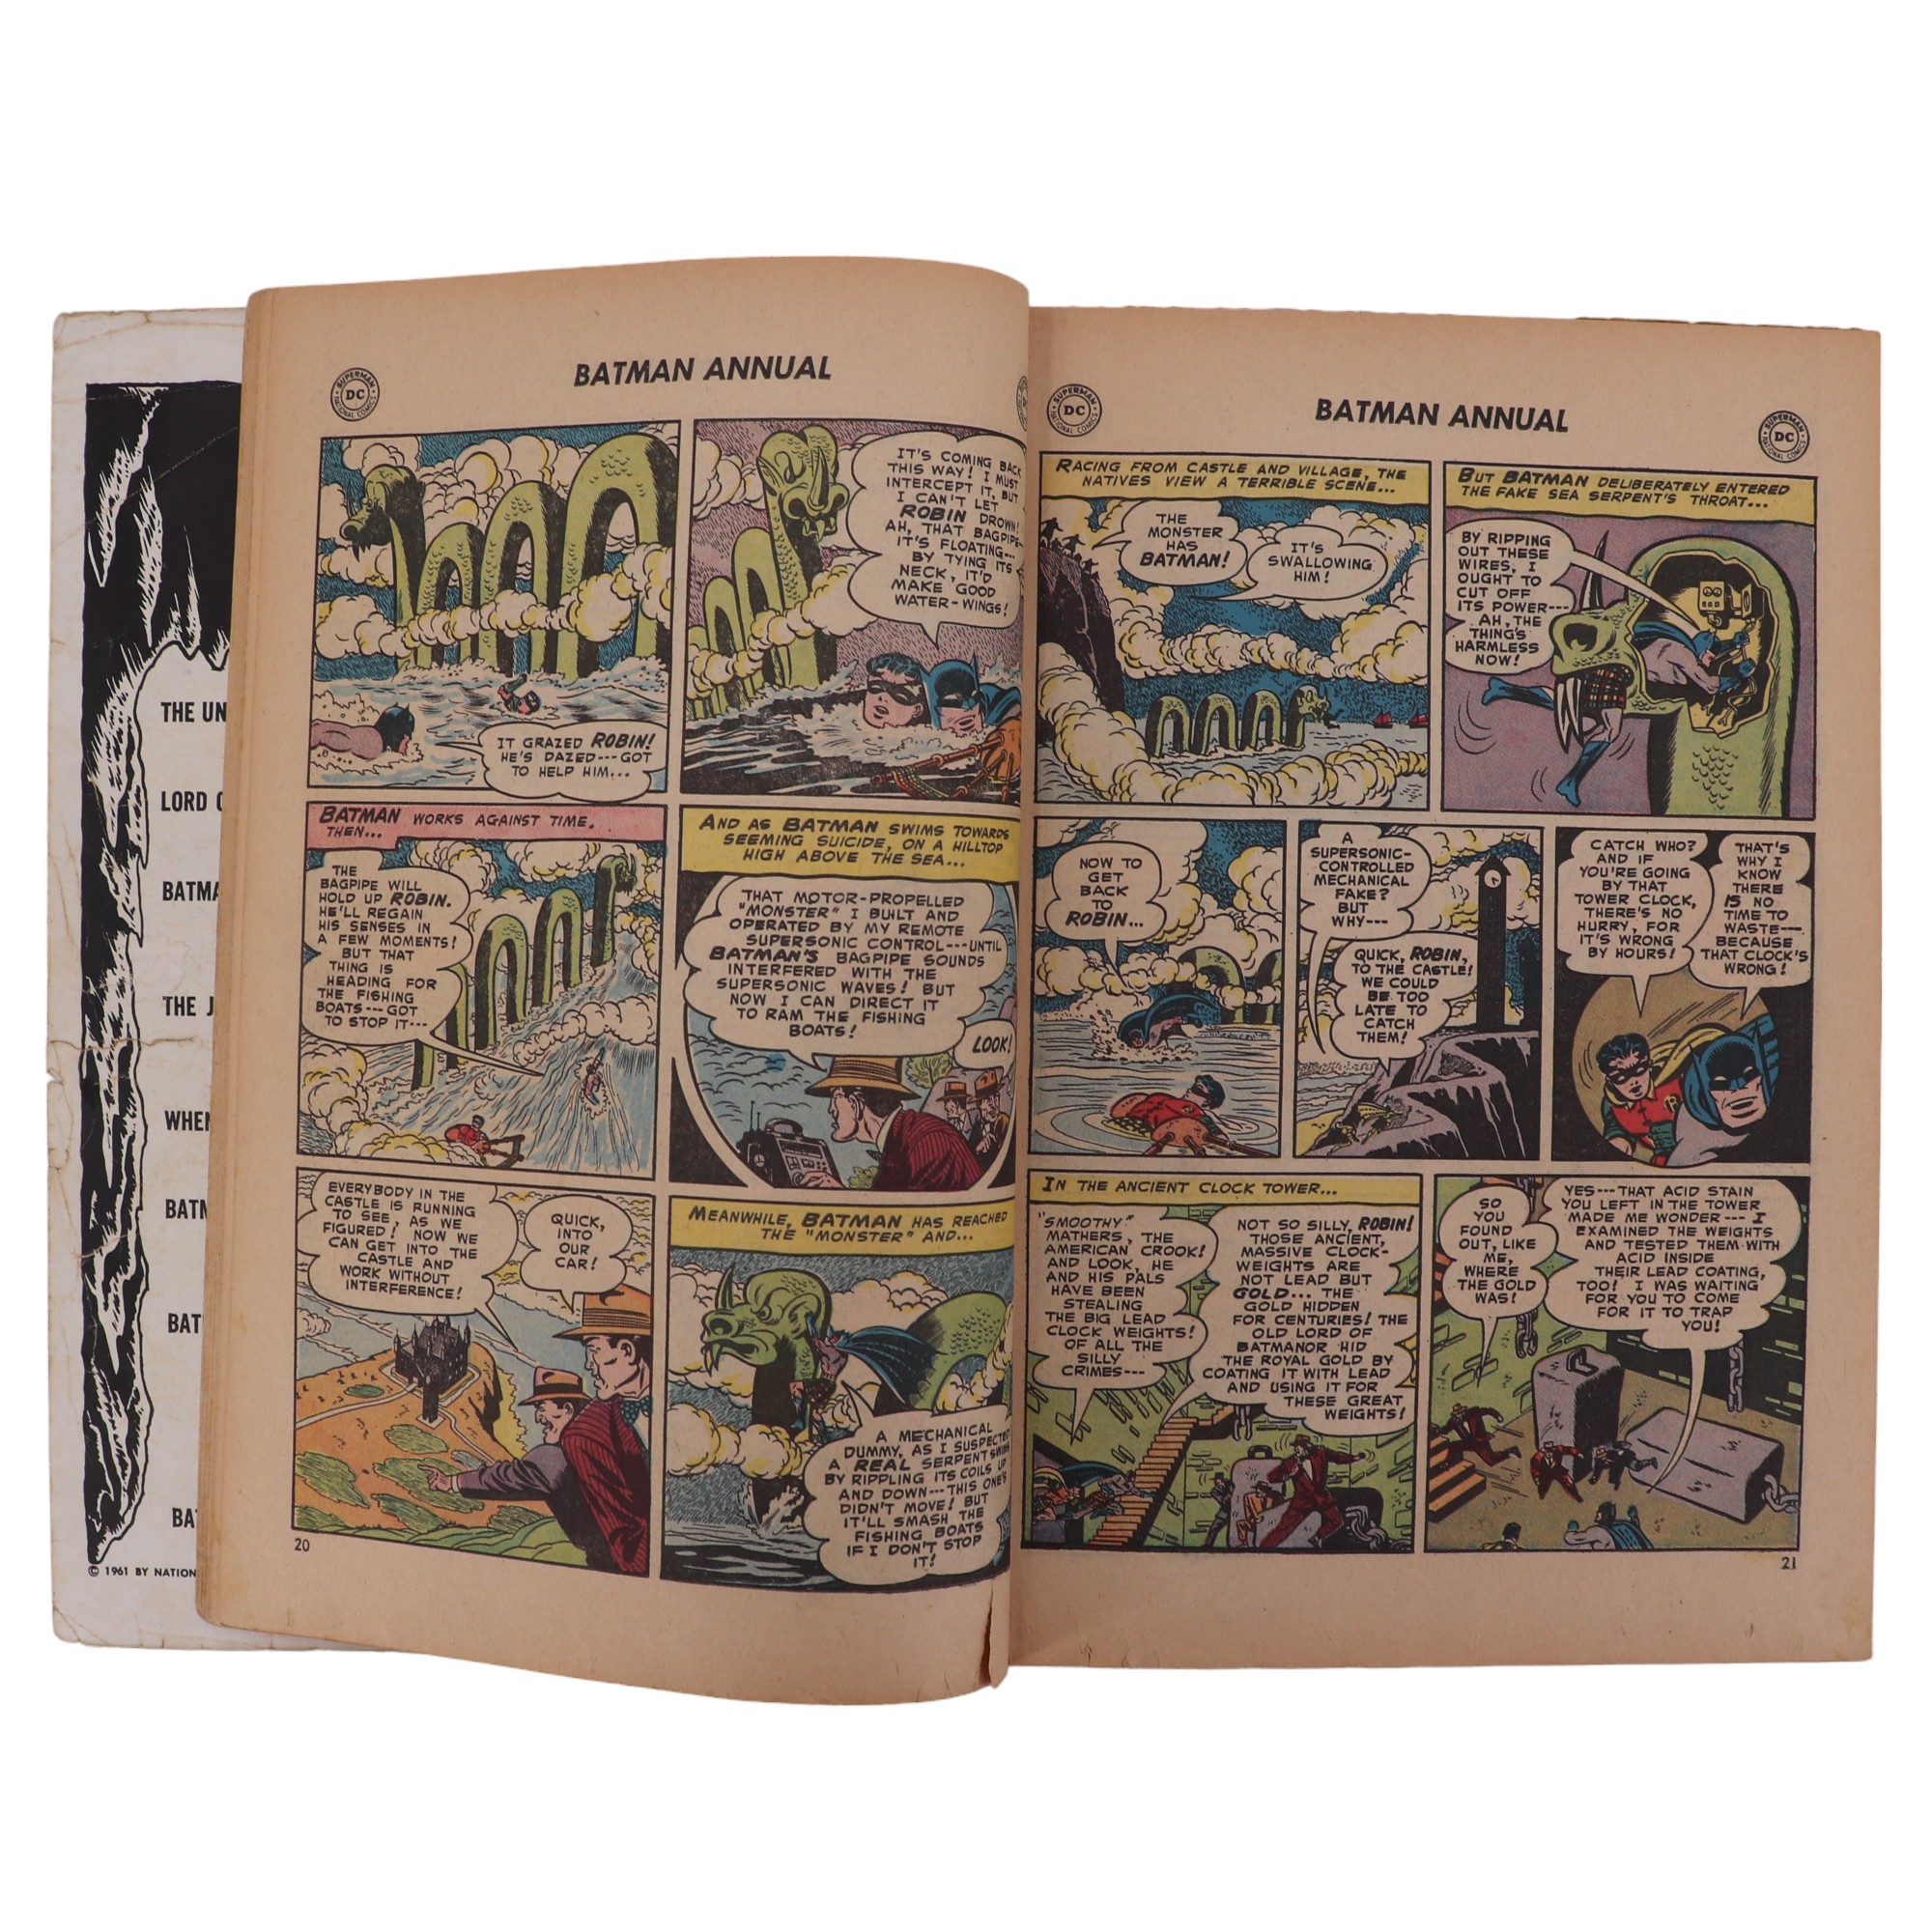 A 1961 DC Giant Batman Annual No. 2 comic book - Image 2 of 2